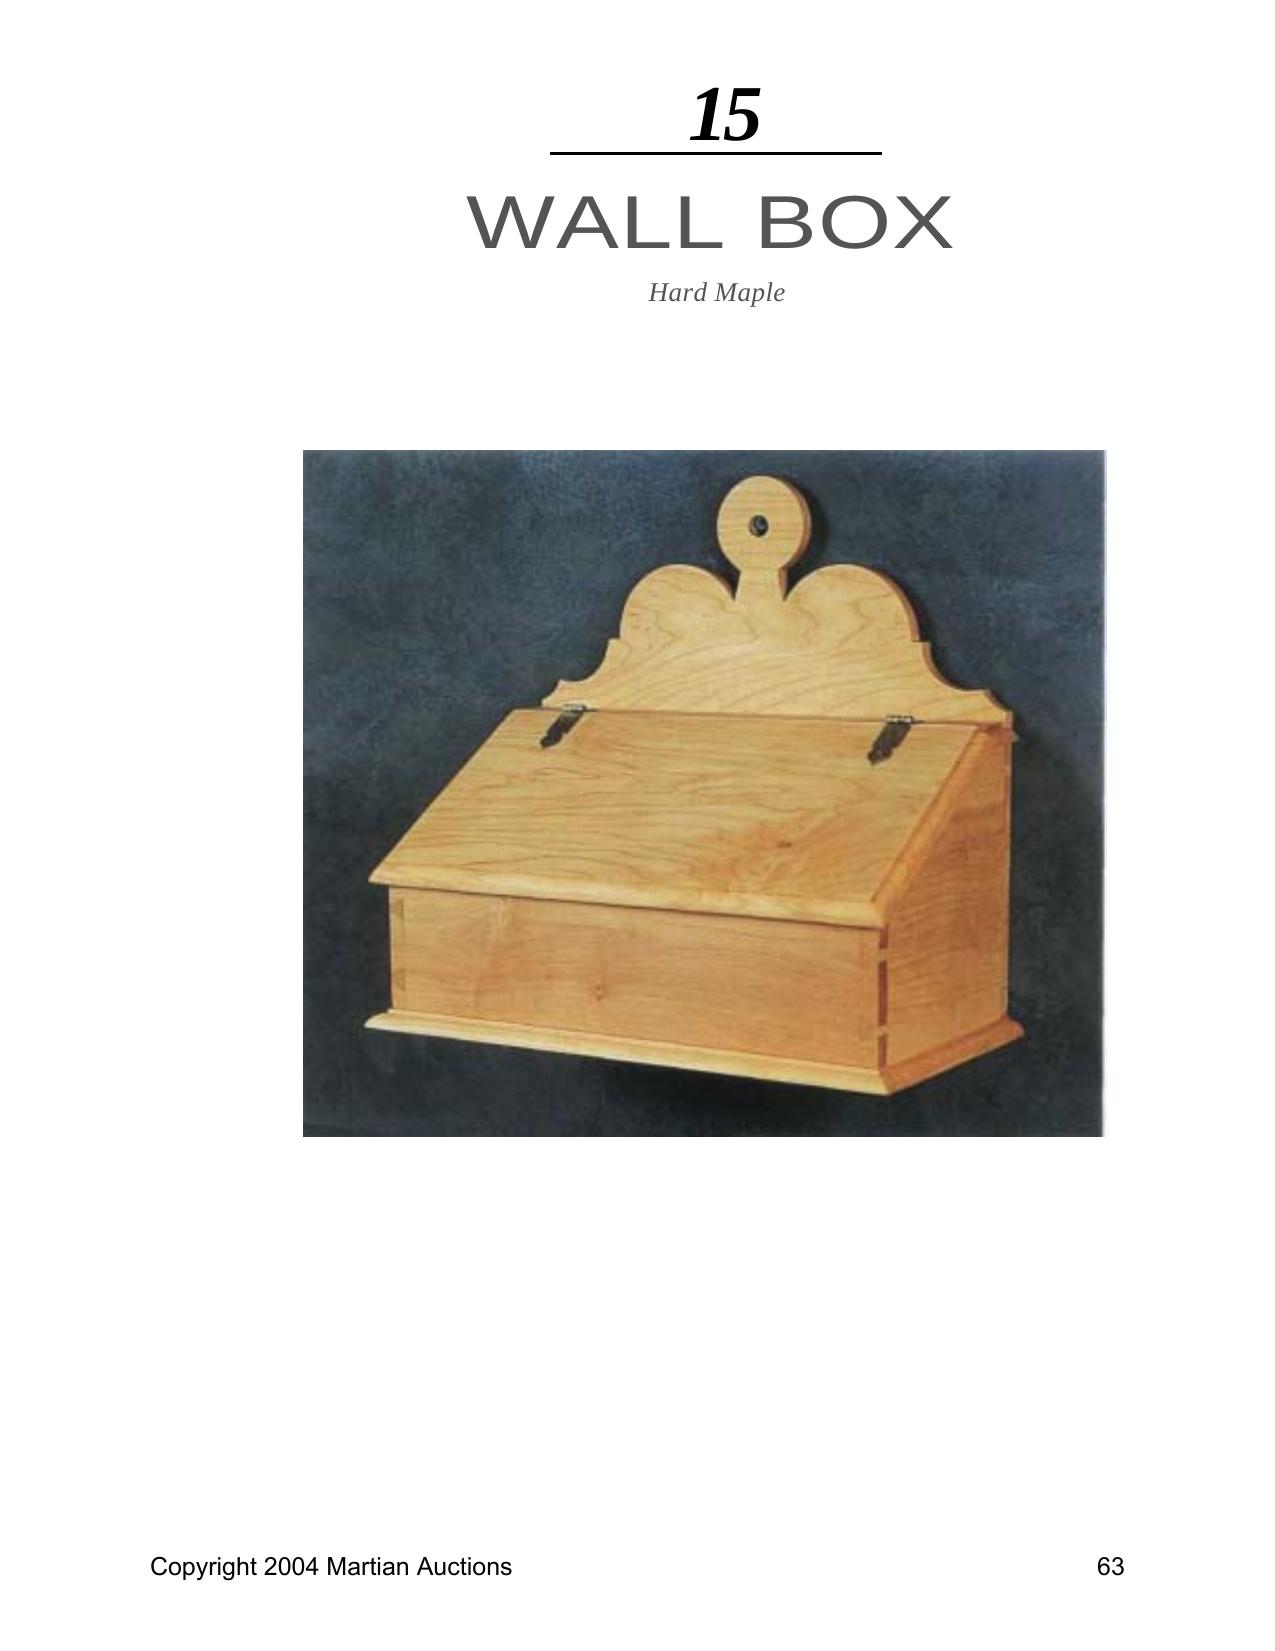 Box by Wallbox